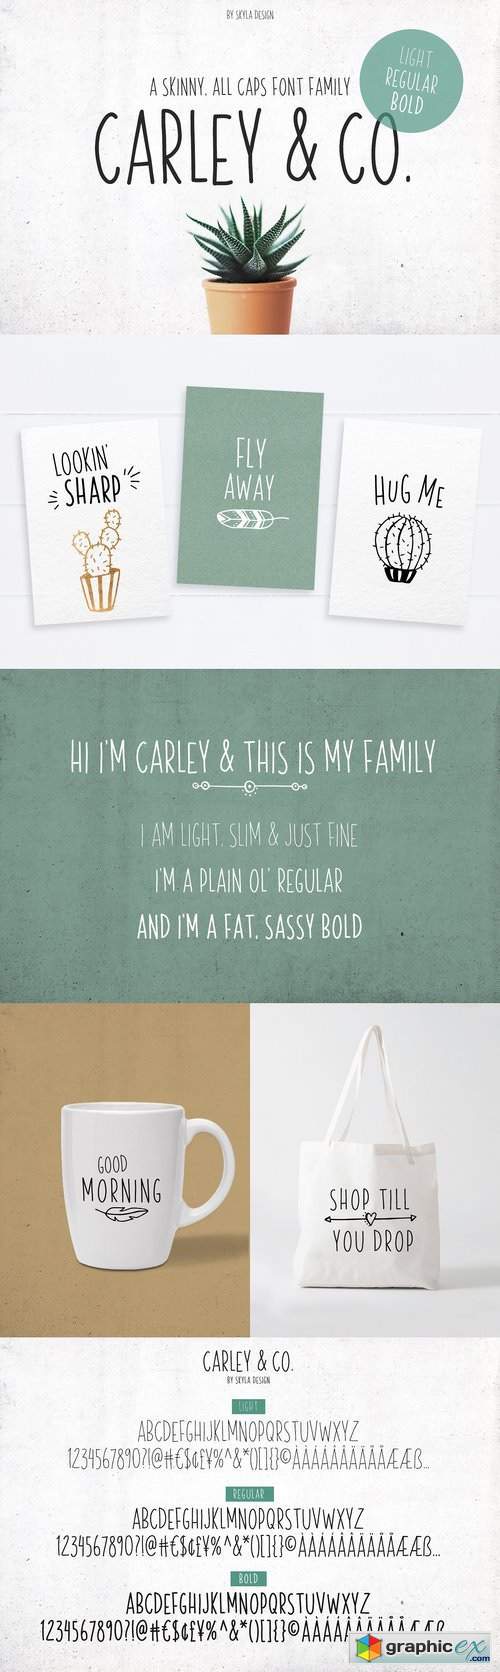 Skinny Font family Carley & Co.